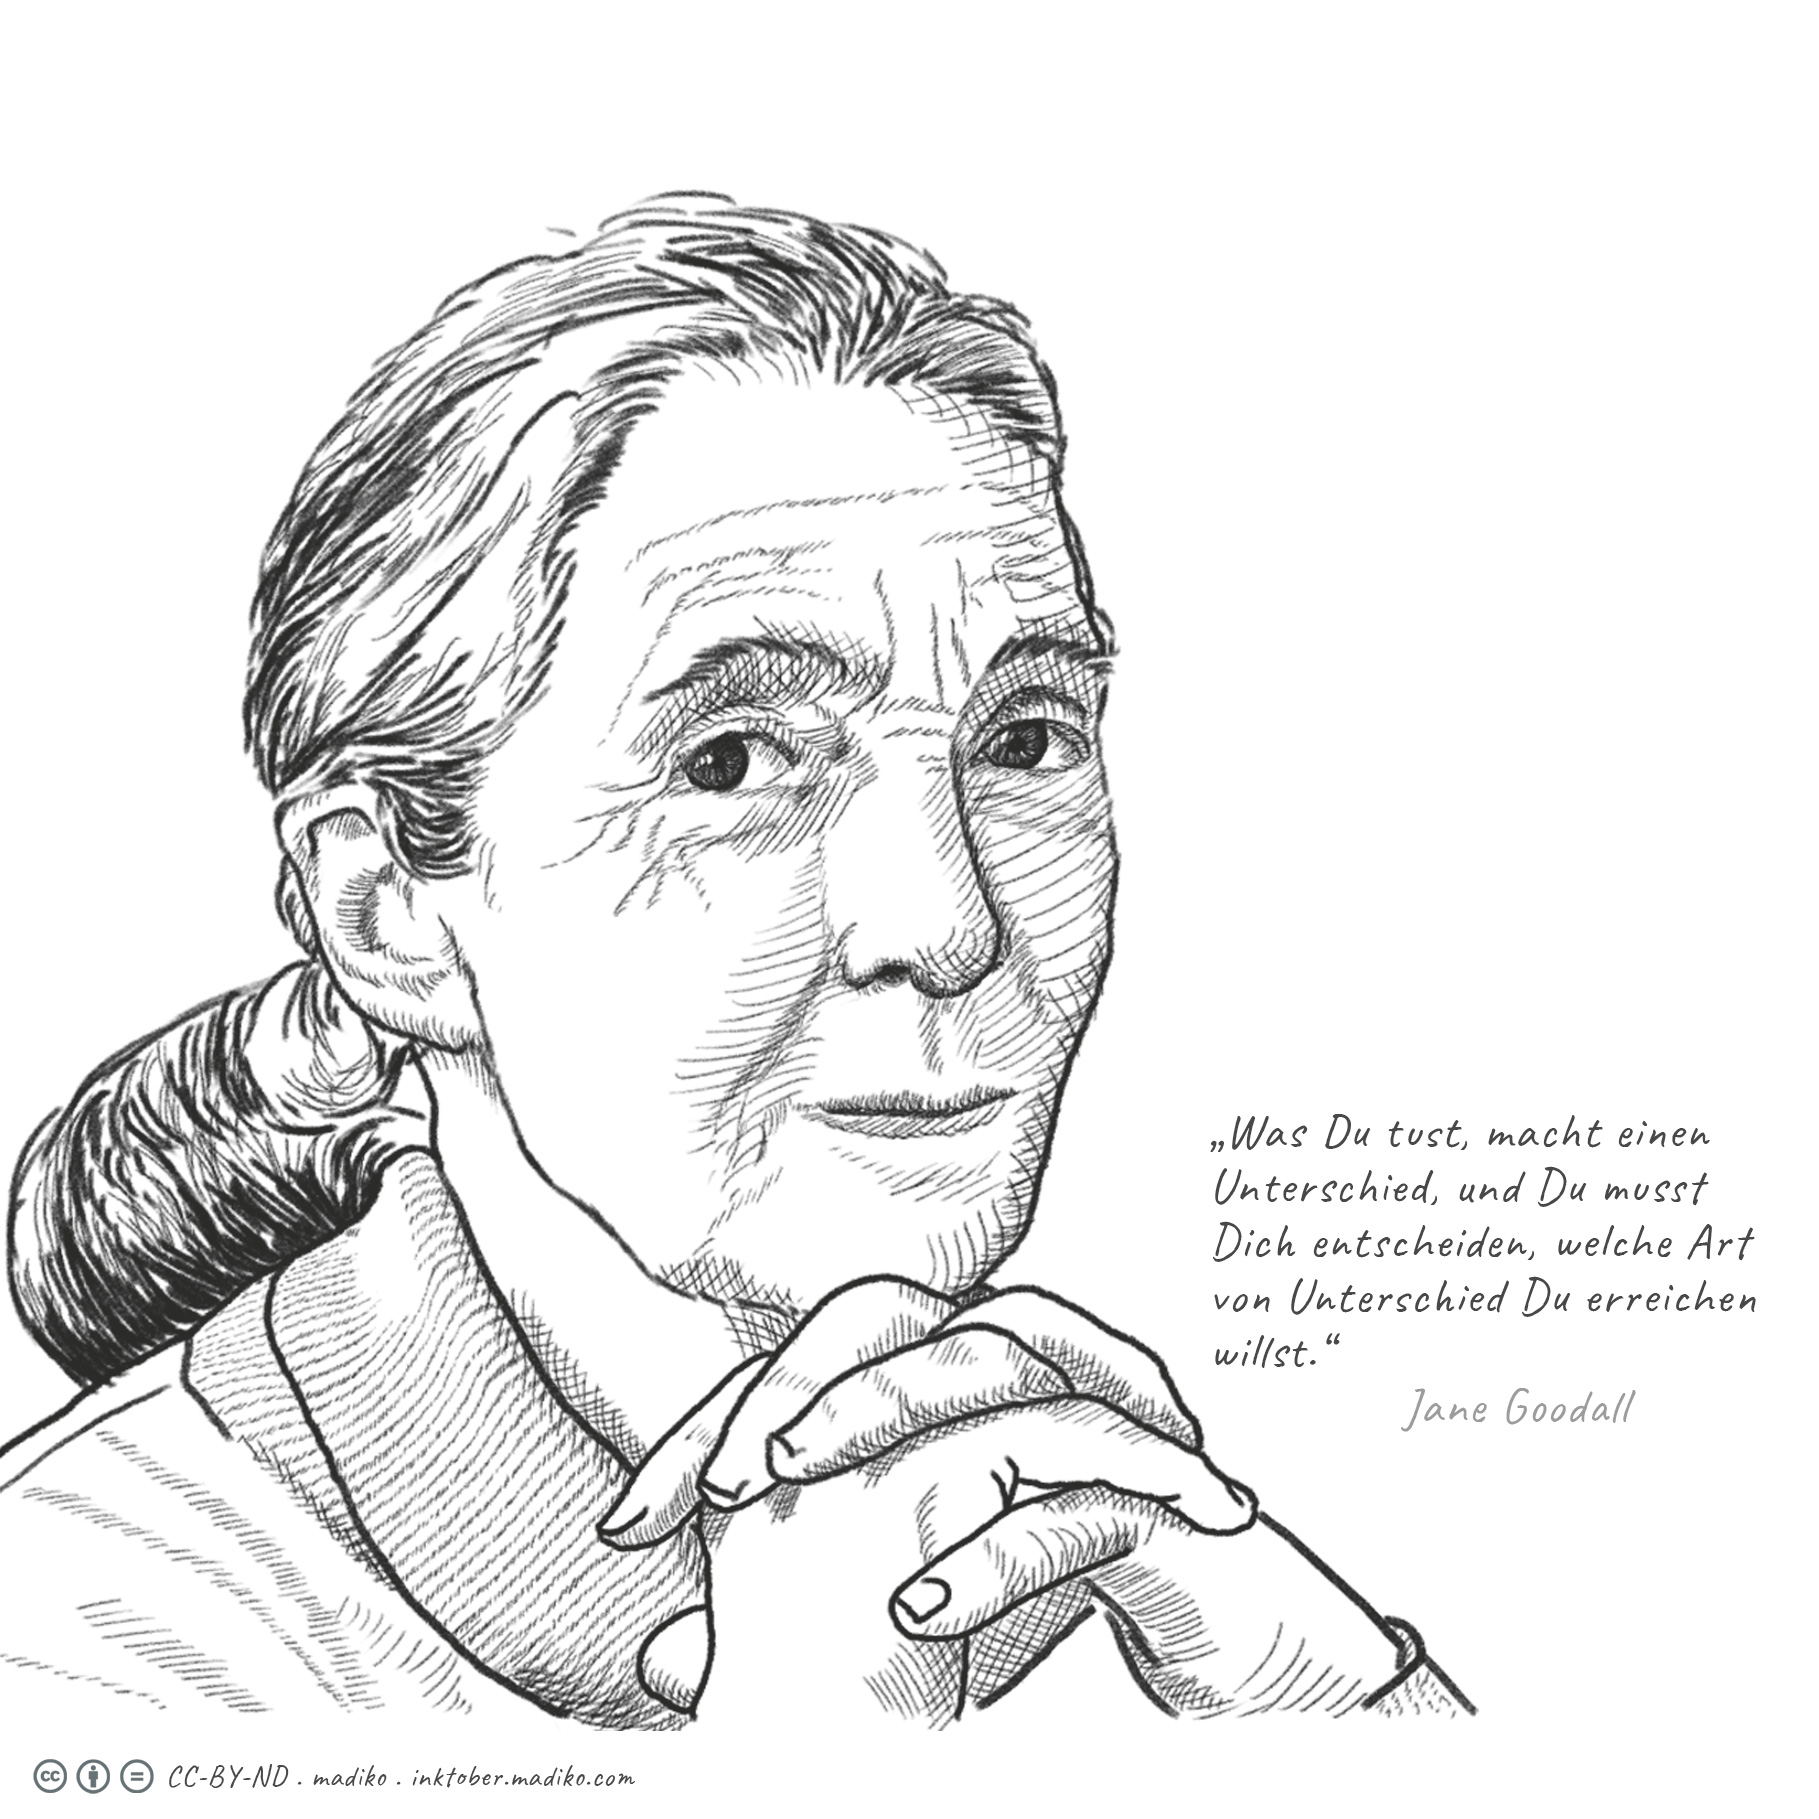 zitatinte: Jane Goodall